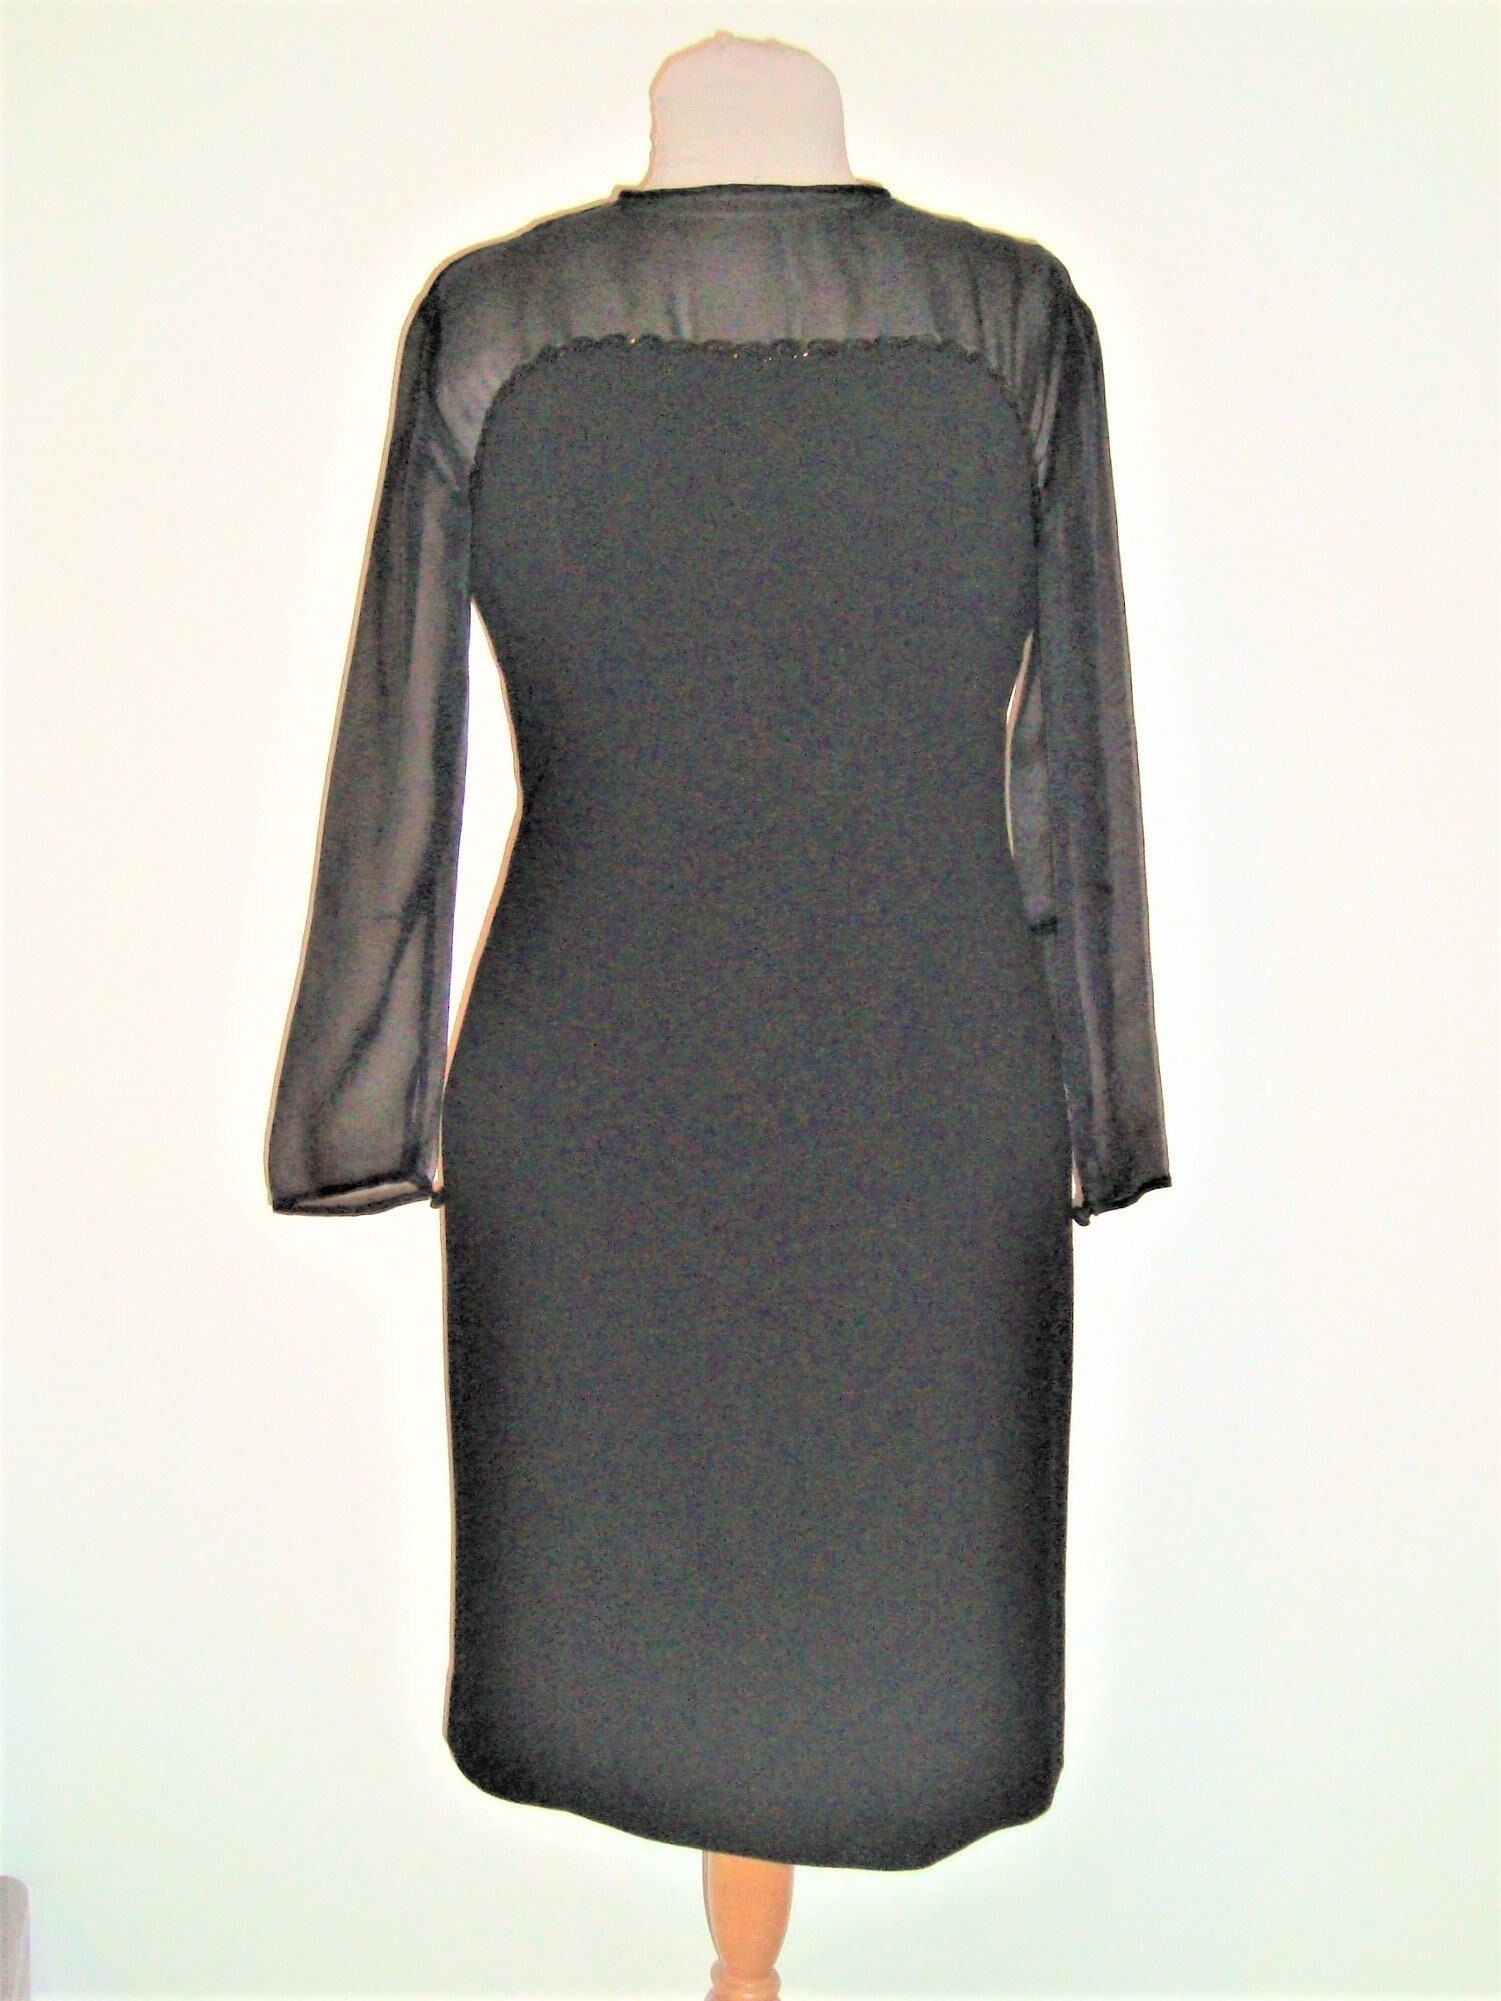 Sheer Black Lace Long Sleeve Two-piece Prom Dress - Xdressy